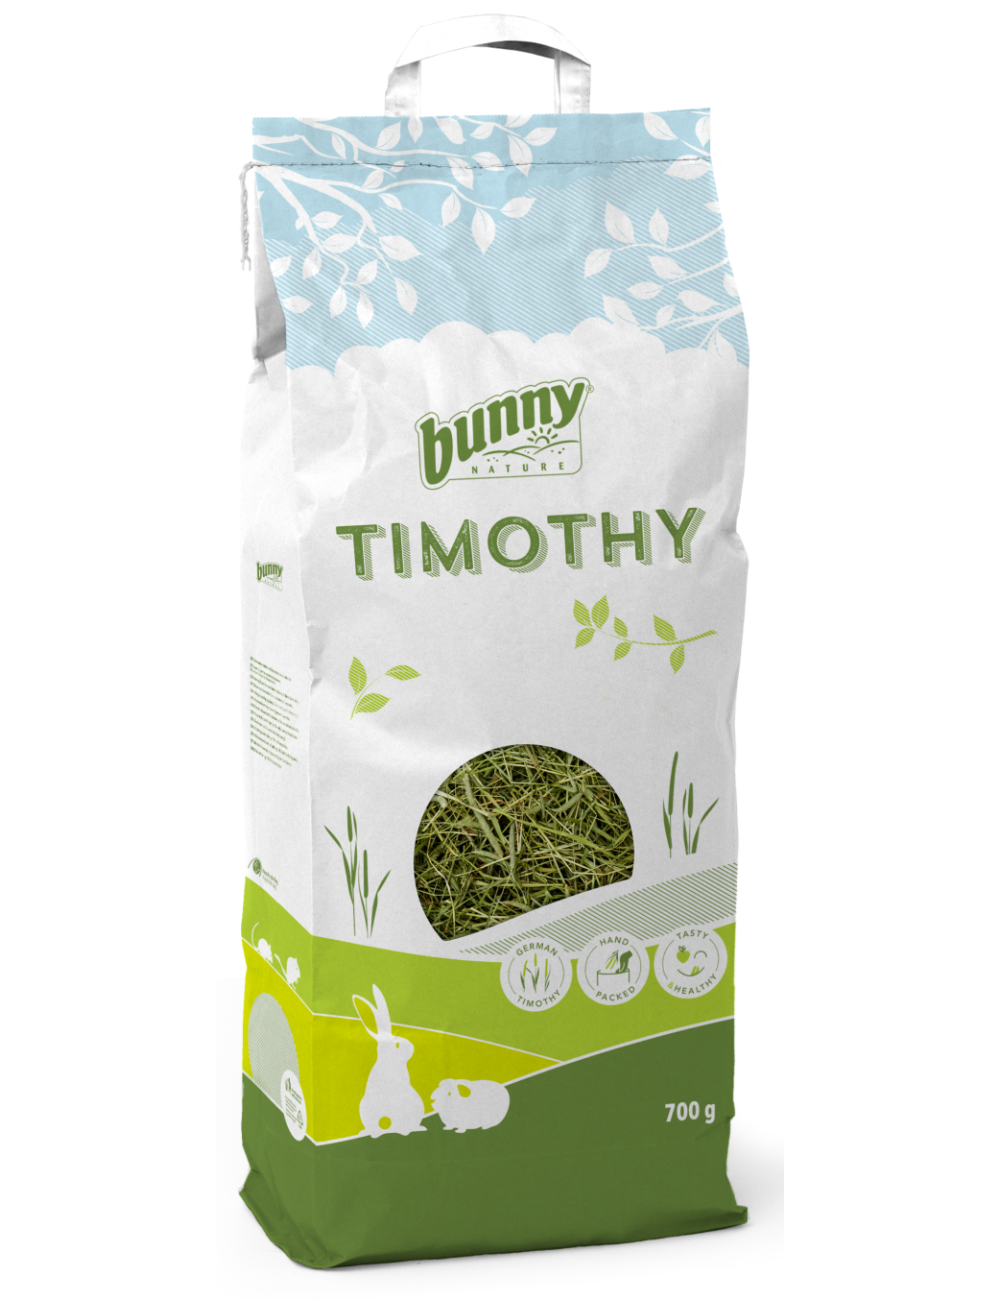 BUNNY NATURE - Timothy Hay Hay 700g